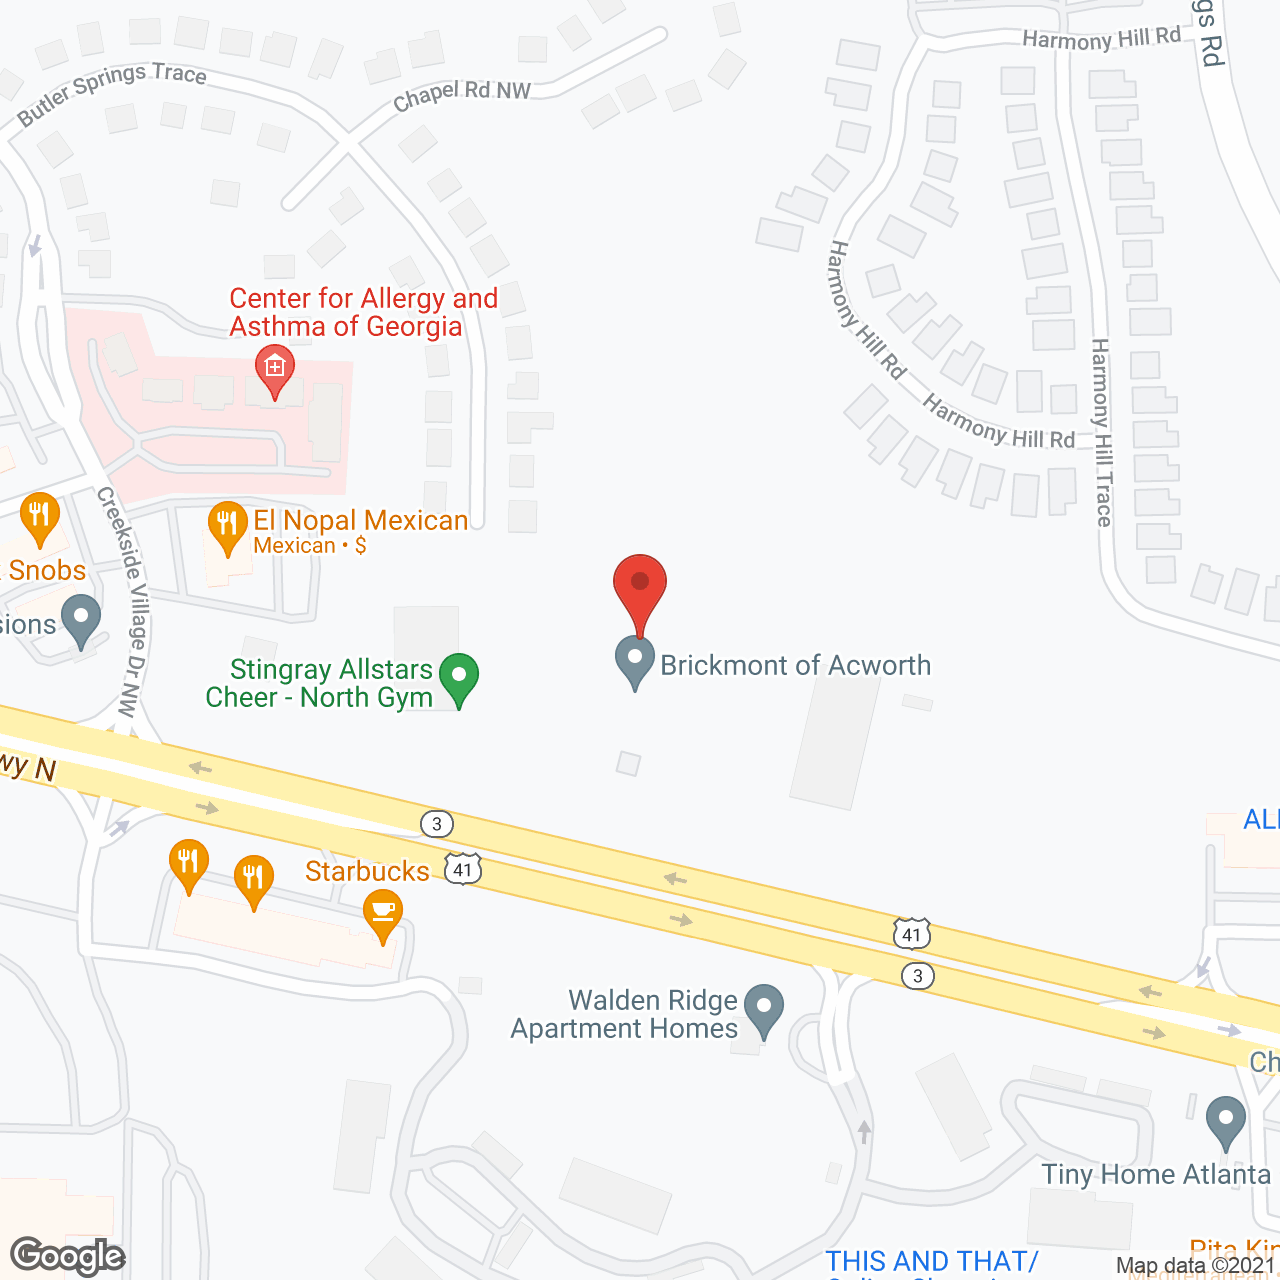 Brickmont of Acworth in google map